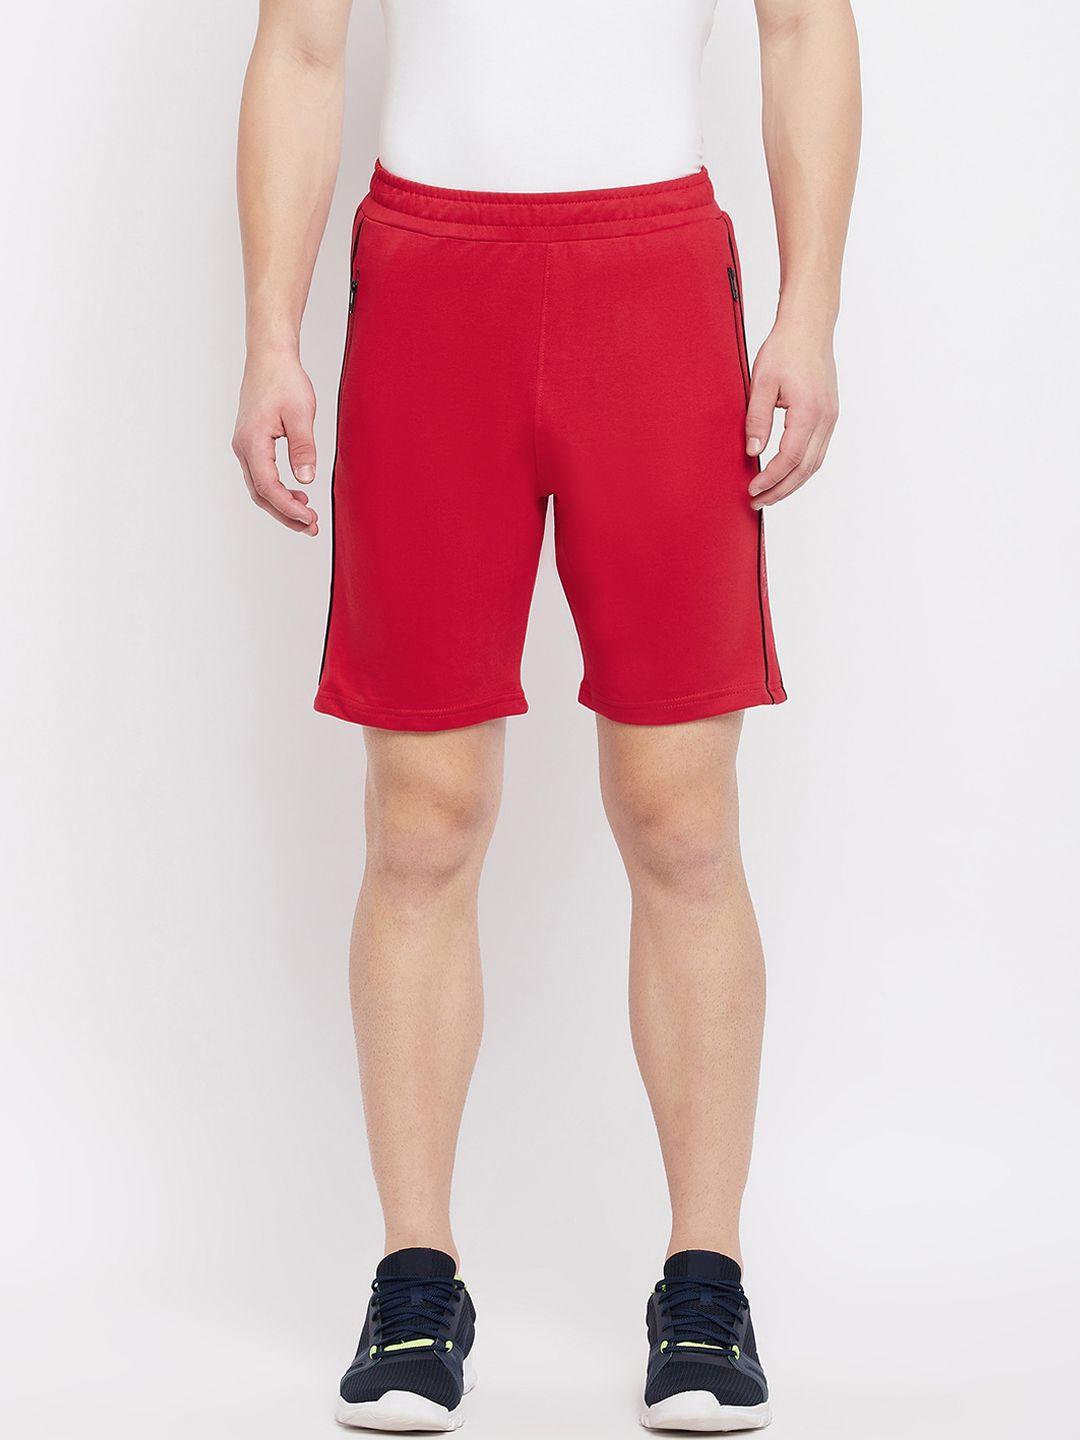 okane-men-red-sports-shorts